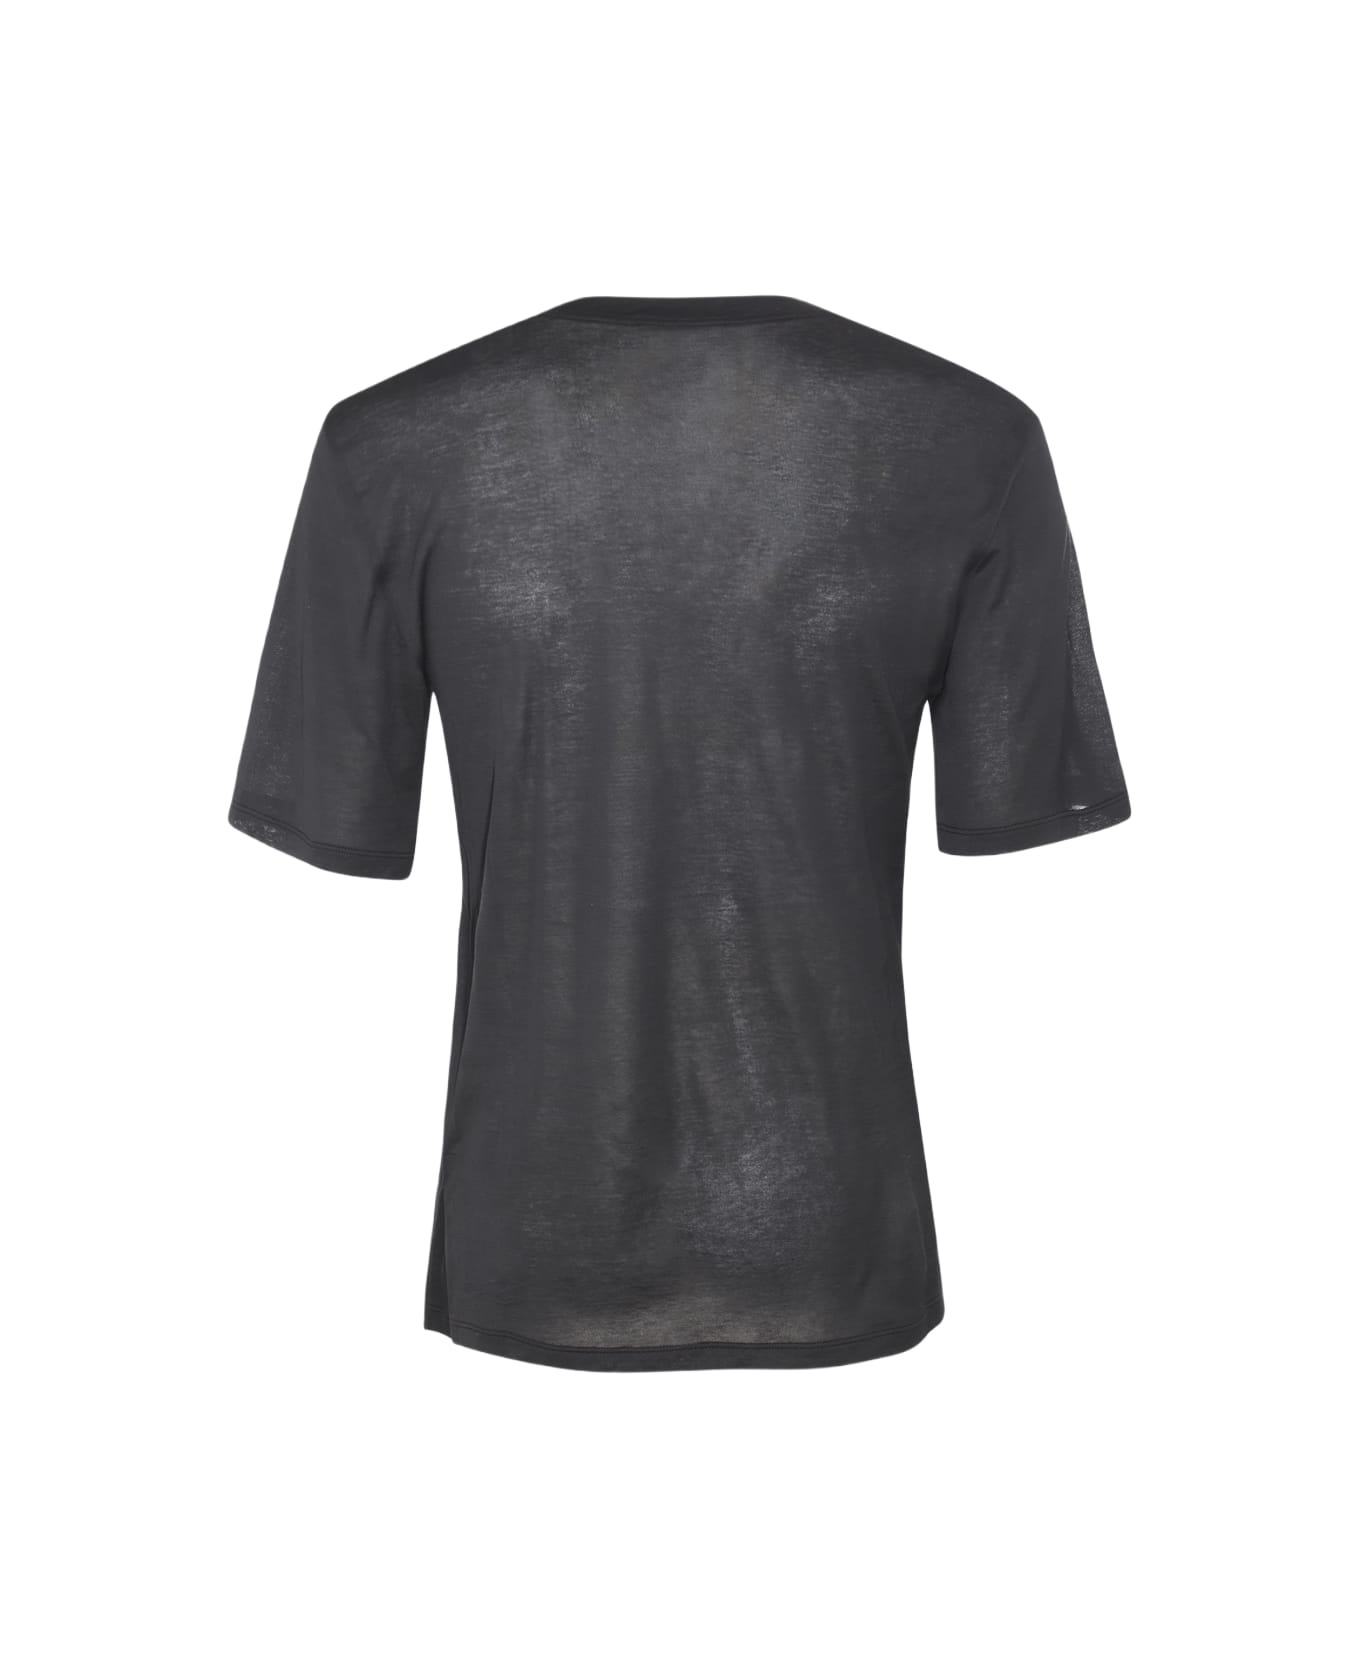 Laneus Black Cotton T-shirt